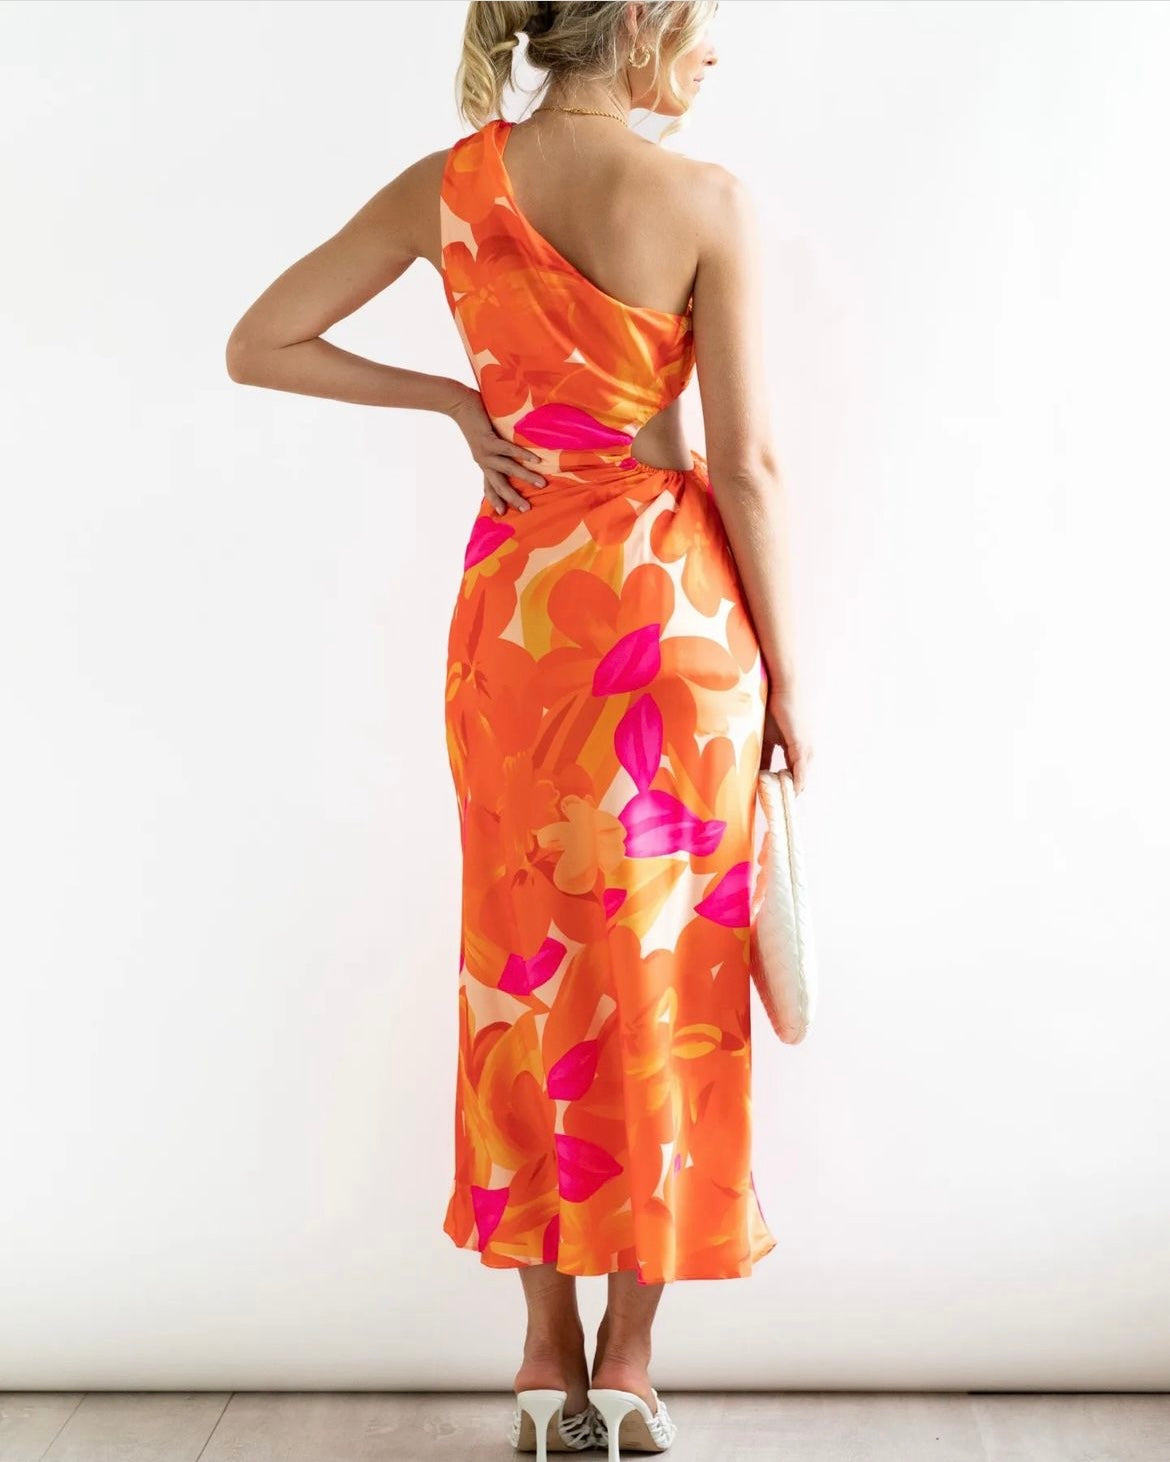 Sweetpot Orange Floral Dress